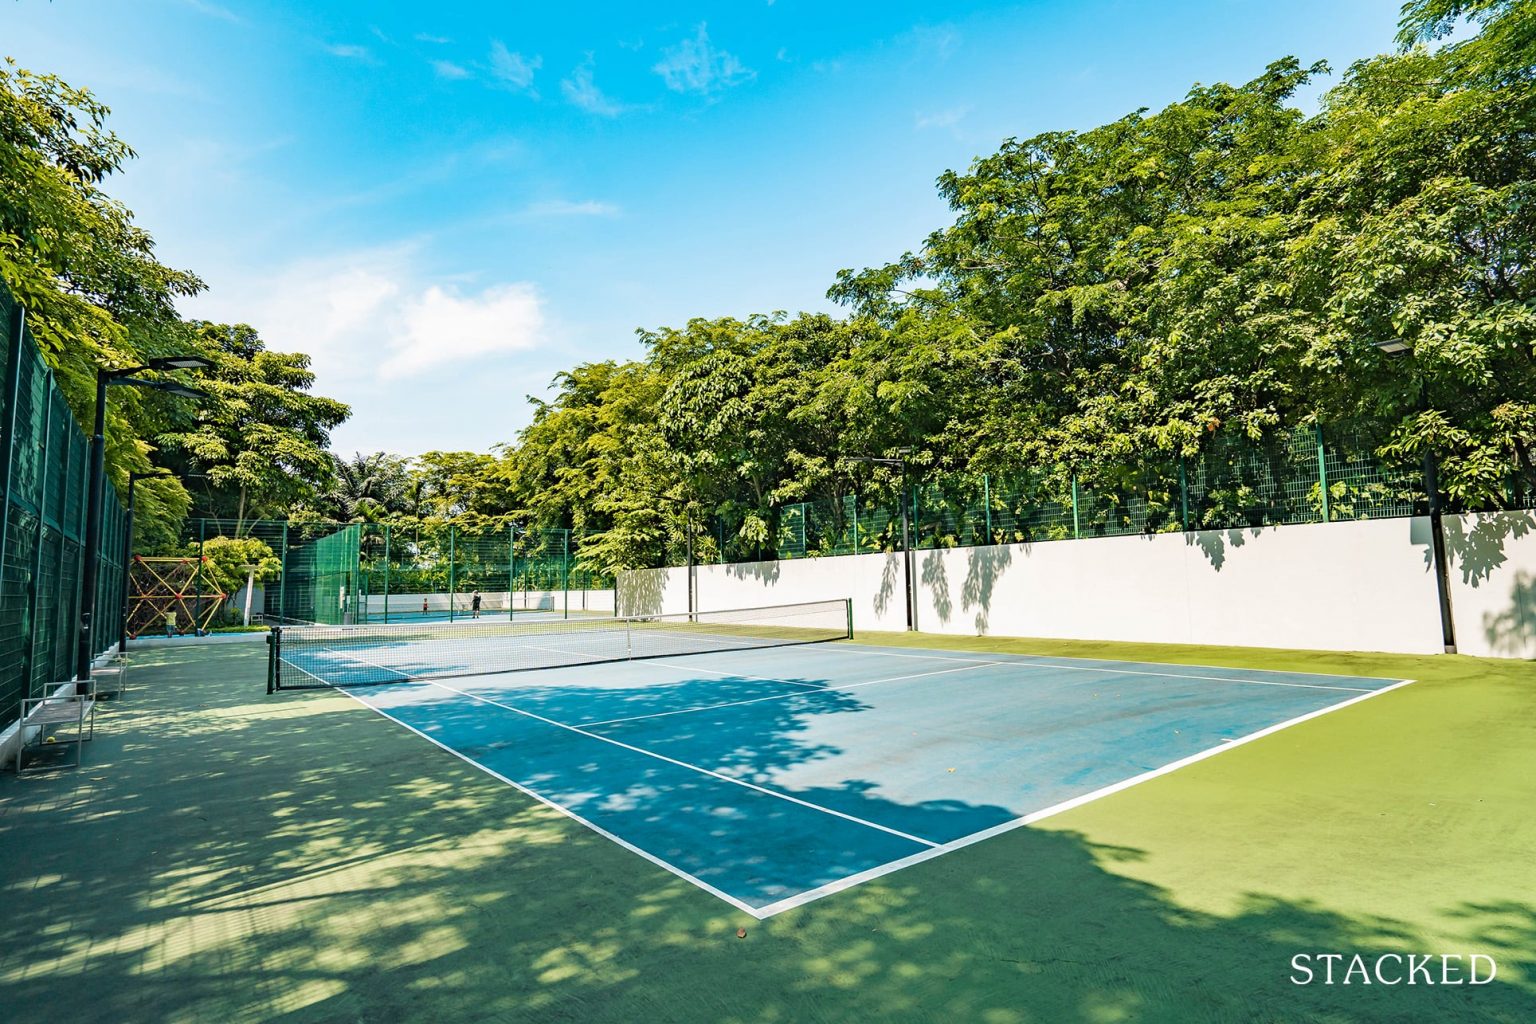 the interlace tennis court